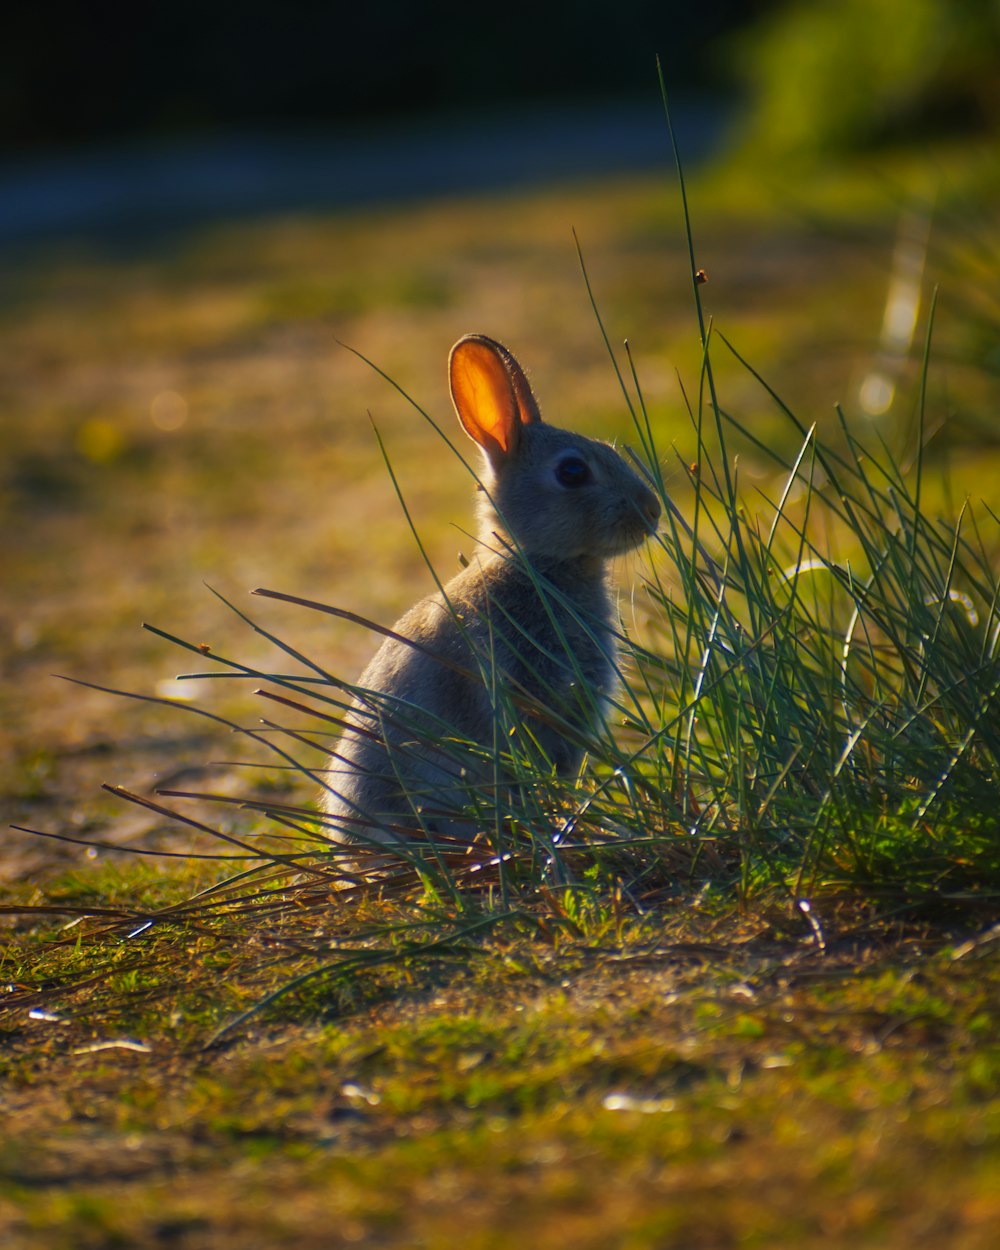 gray rabbit on green grass during daytime